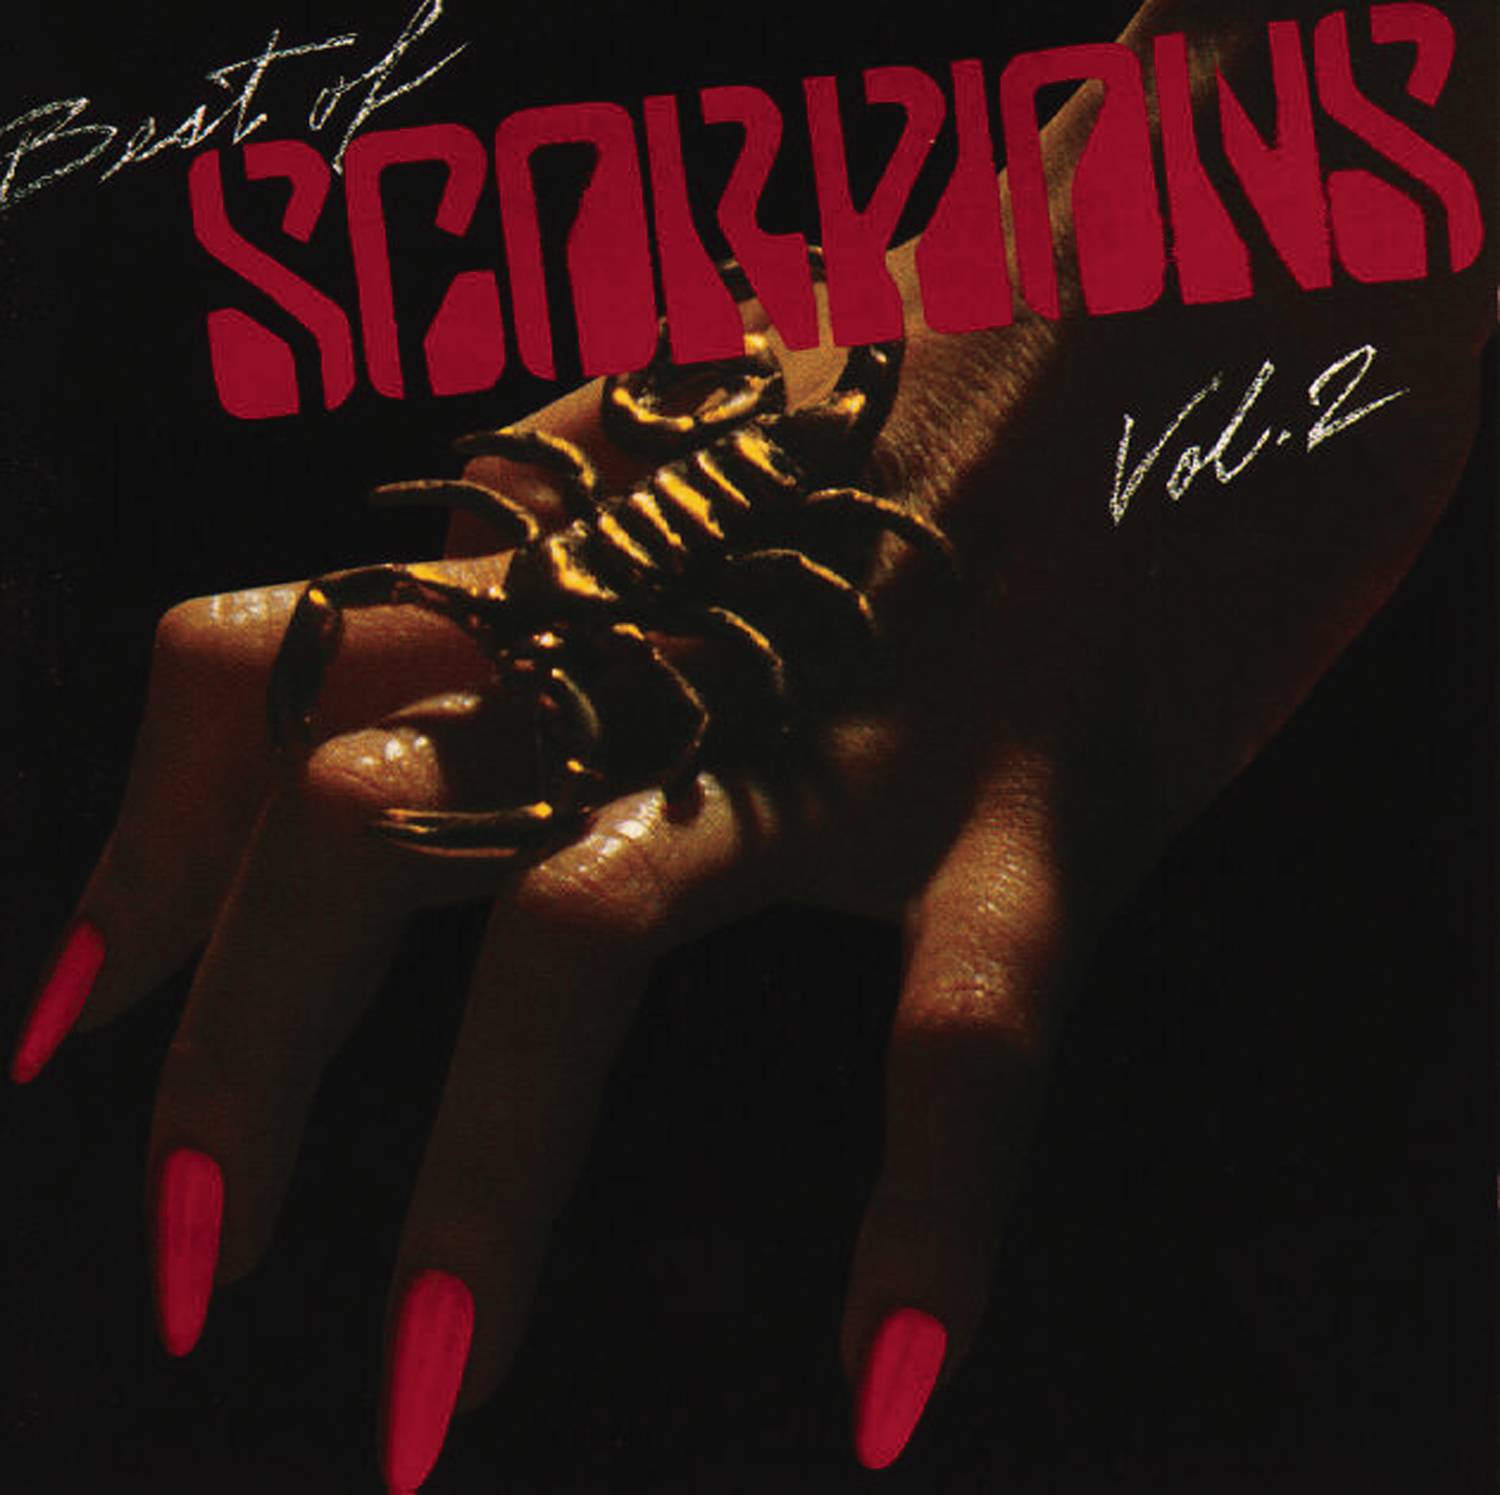 Best Of Scorpions Vol. 2